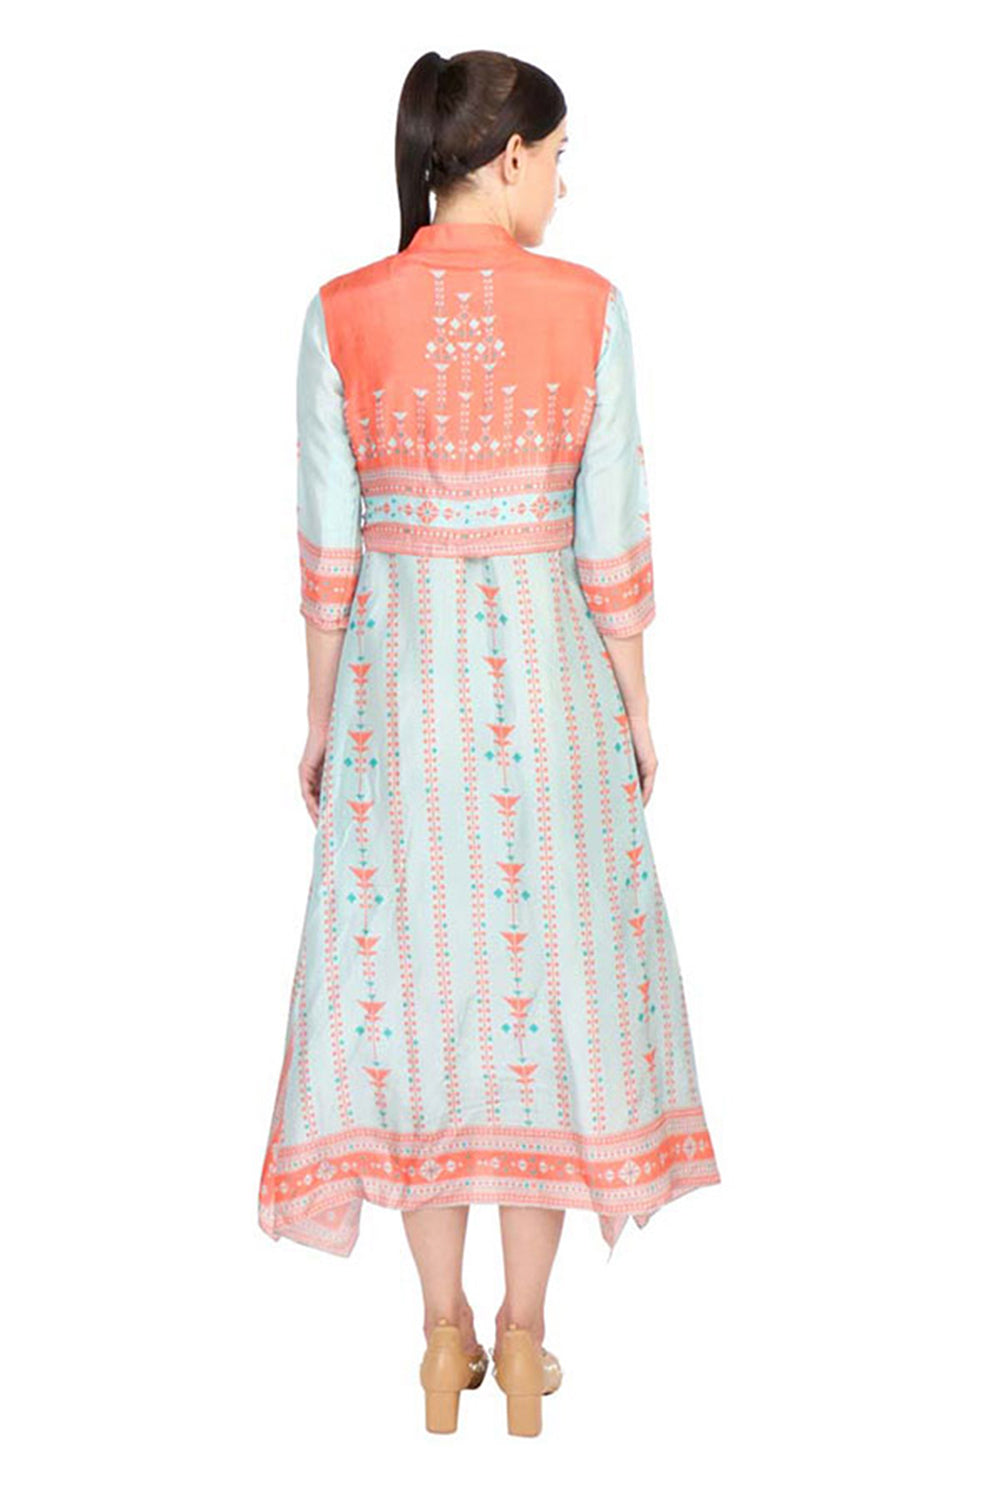 Azulejos Printed Dress With Short Jacket